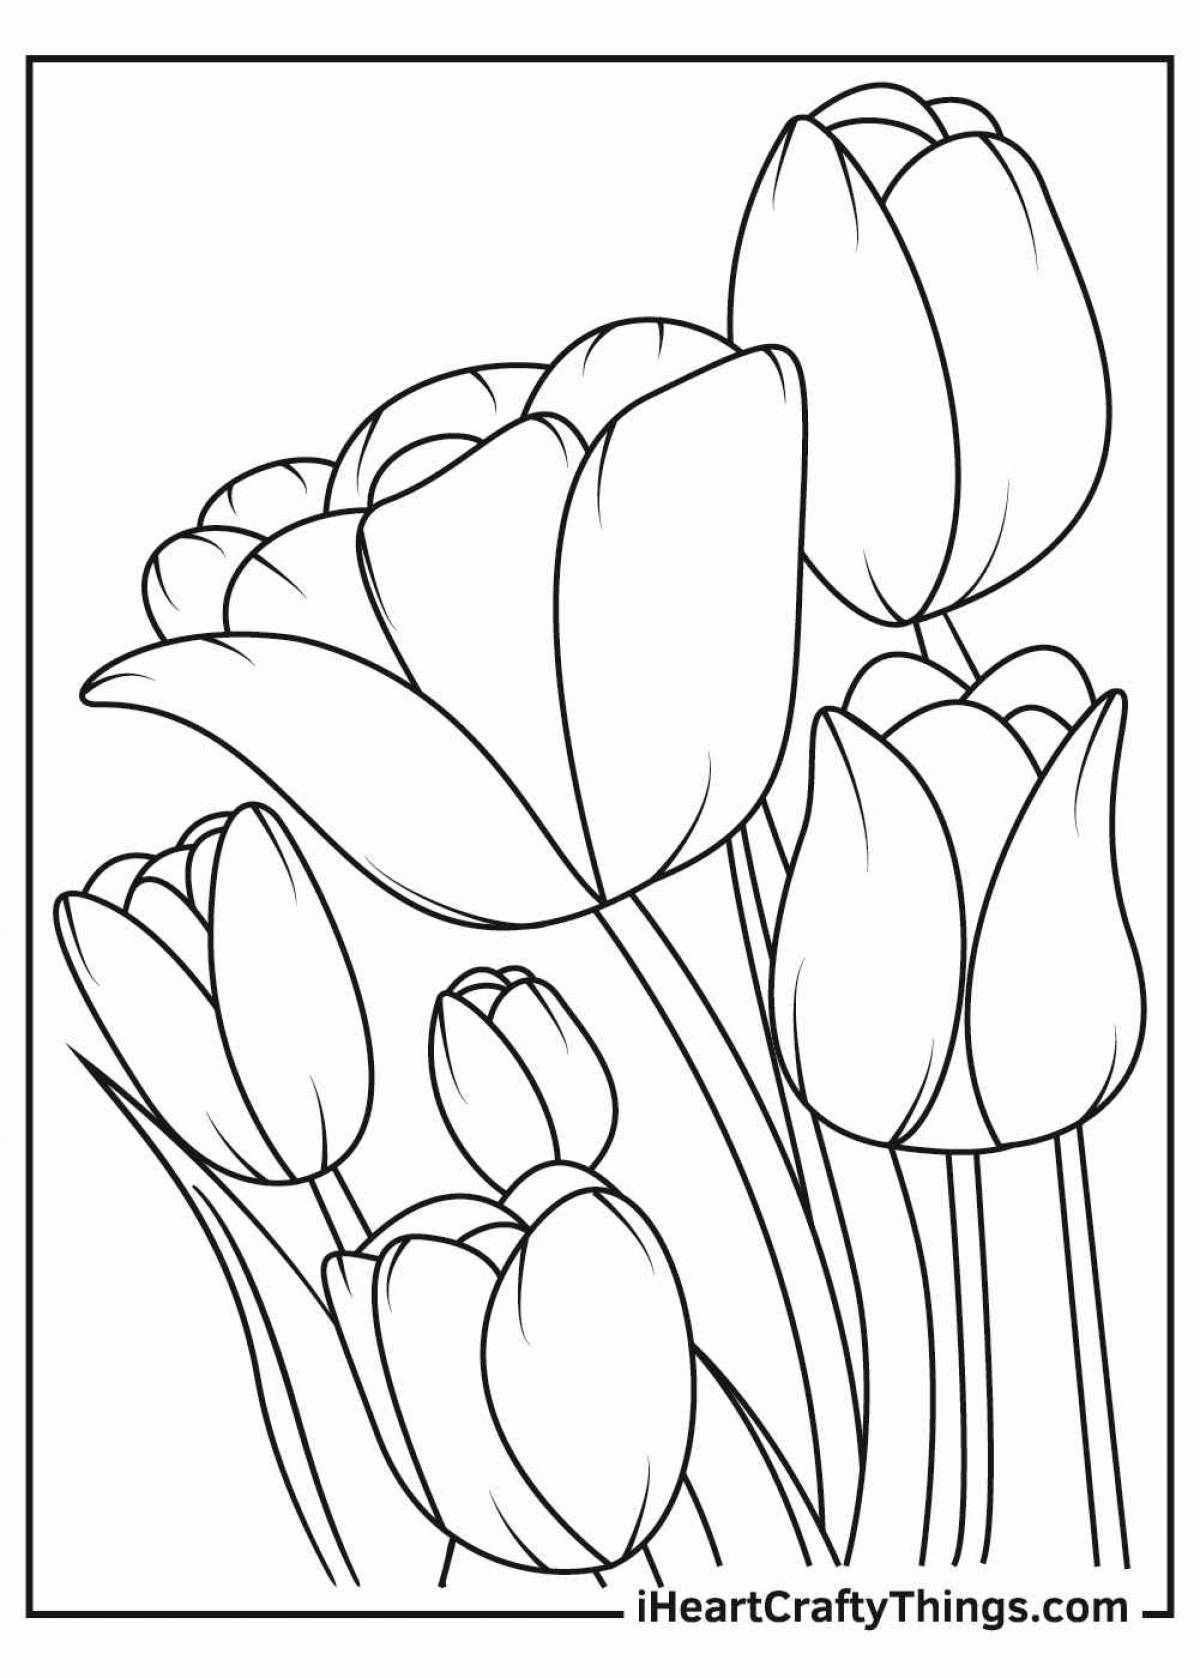 Adorable pre-k tulip coloring book